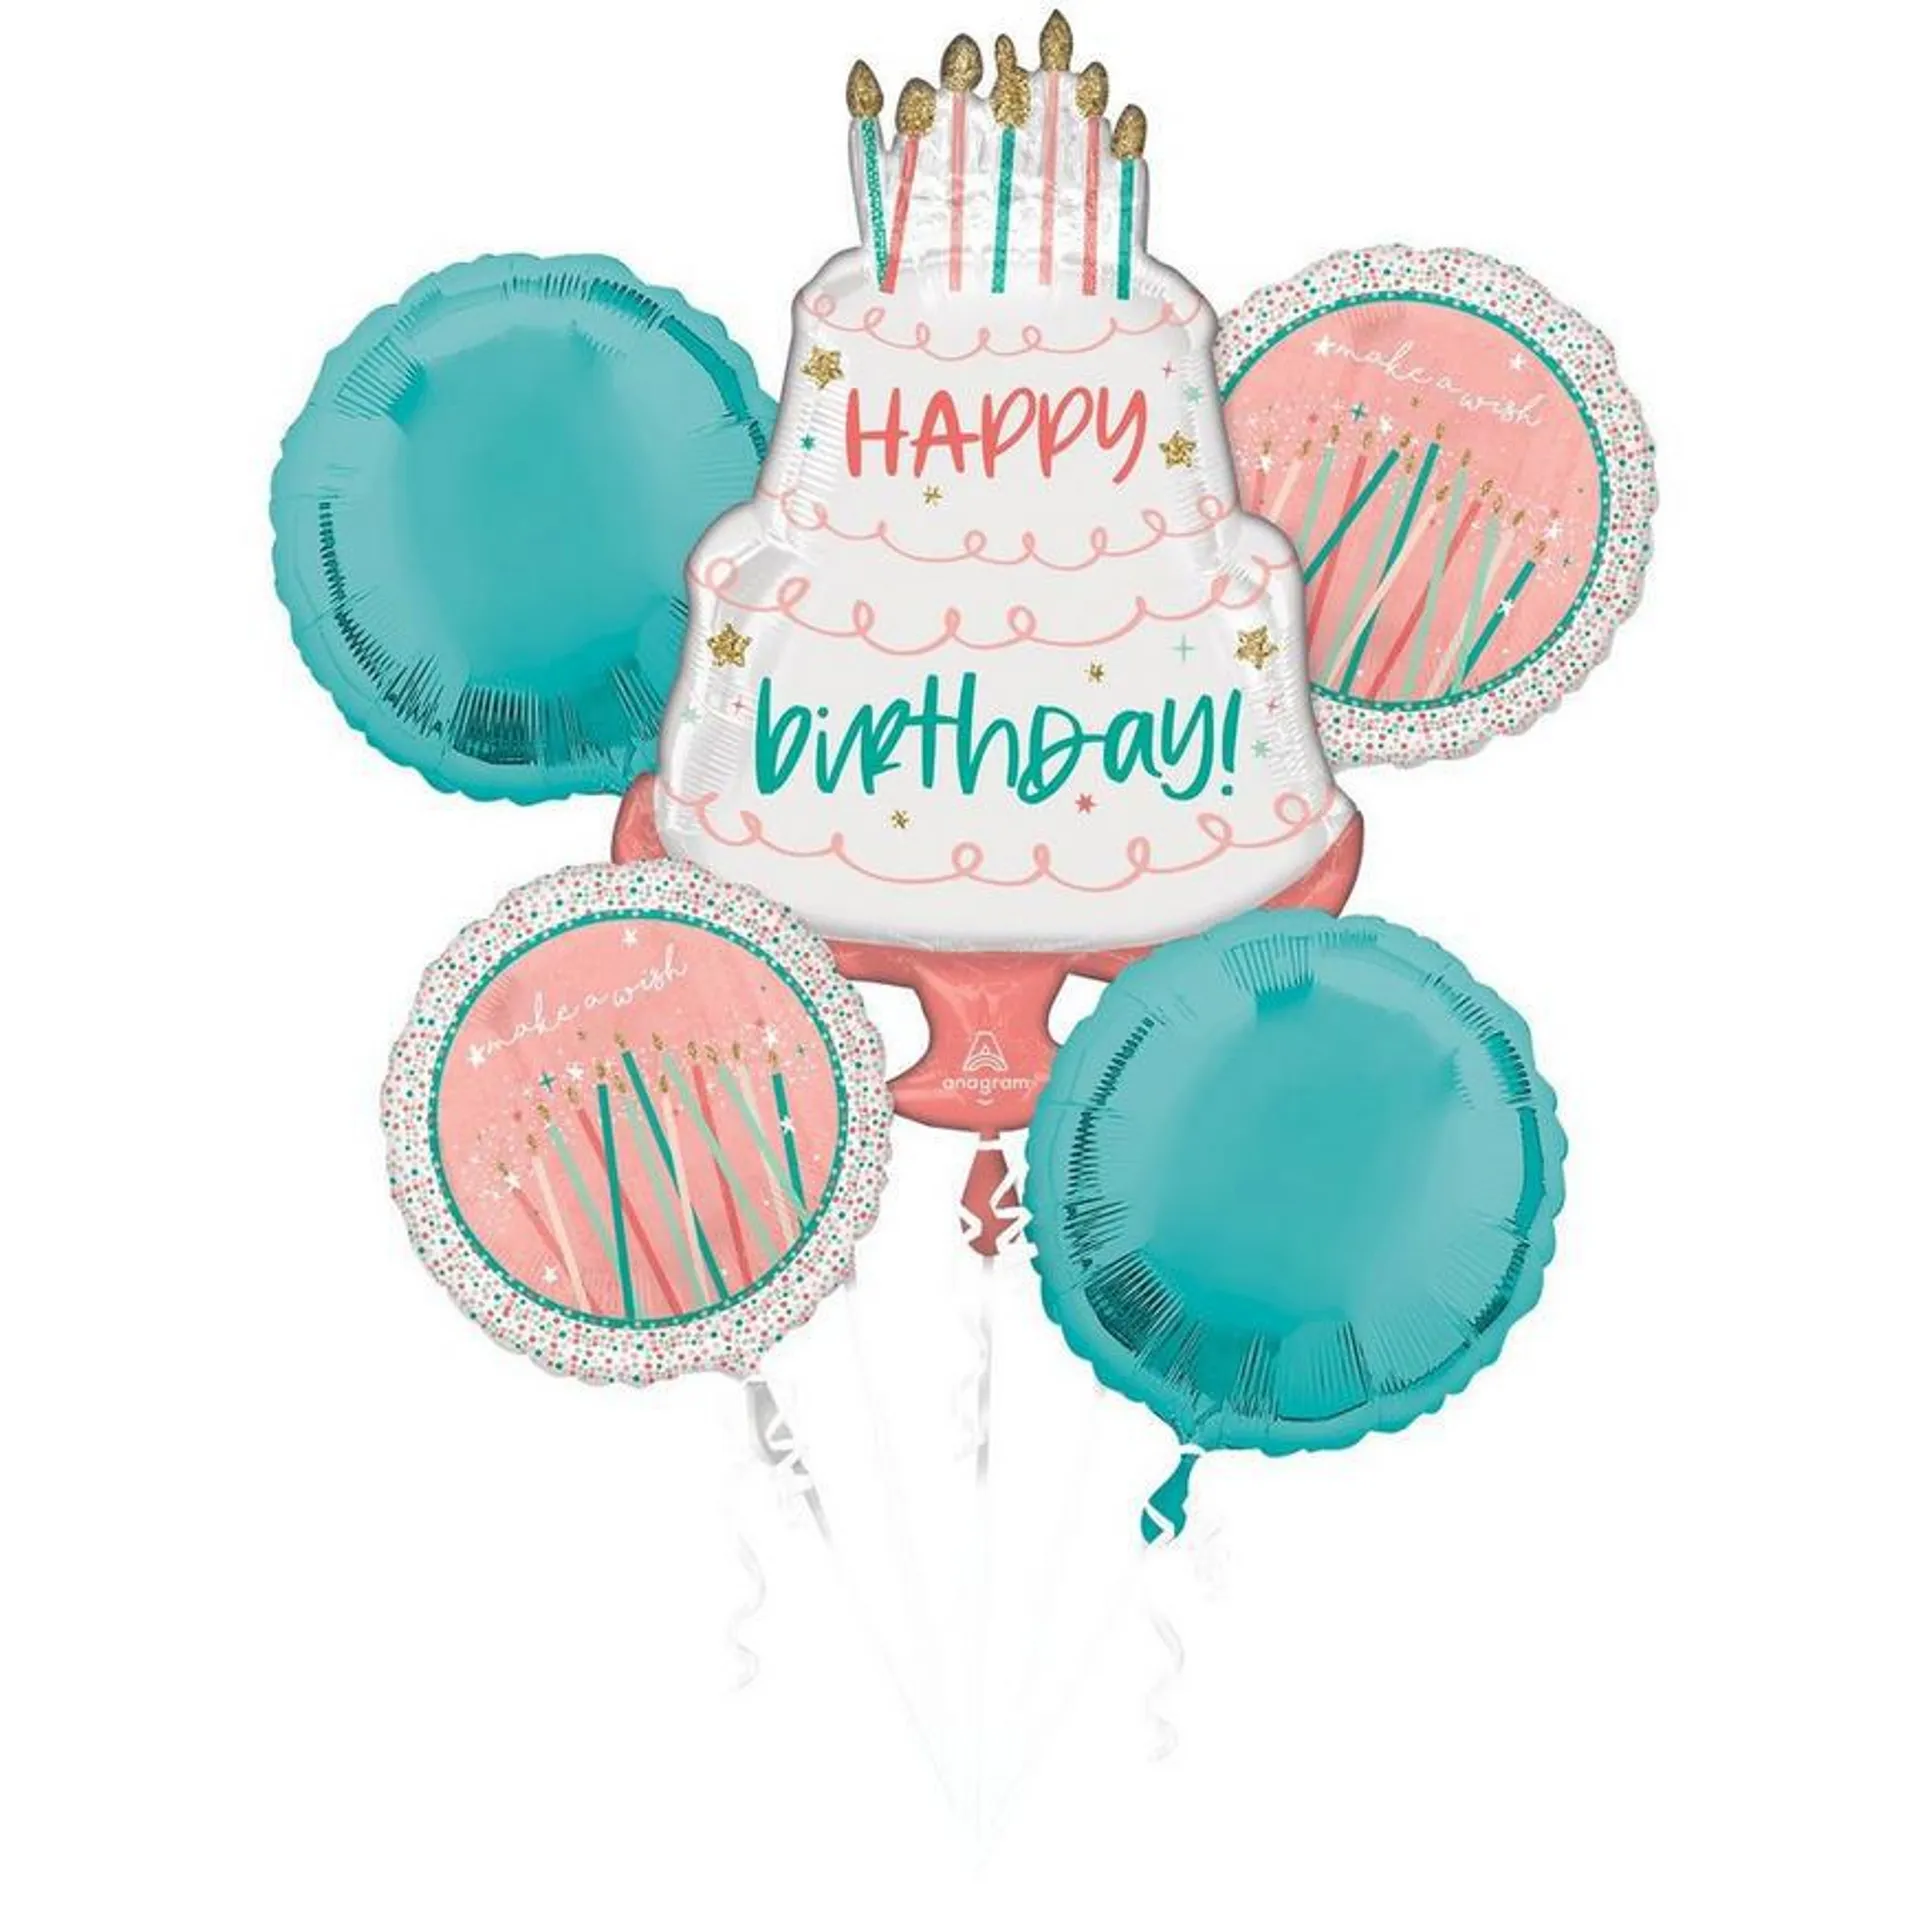 Happy Cake Day Birthday Balloon Bouquet 5pc